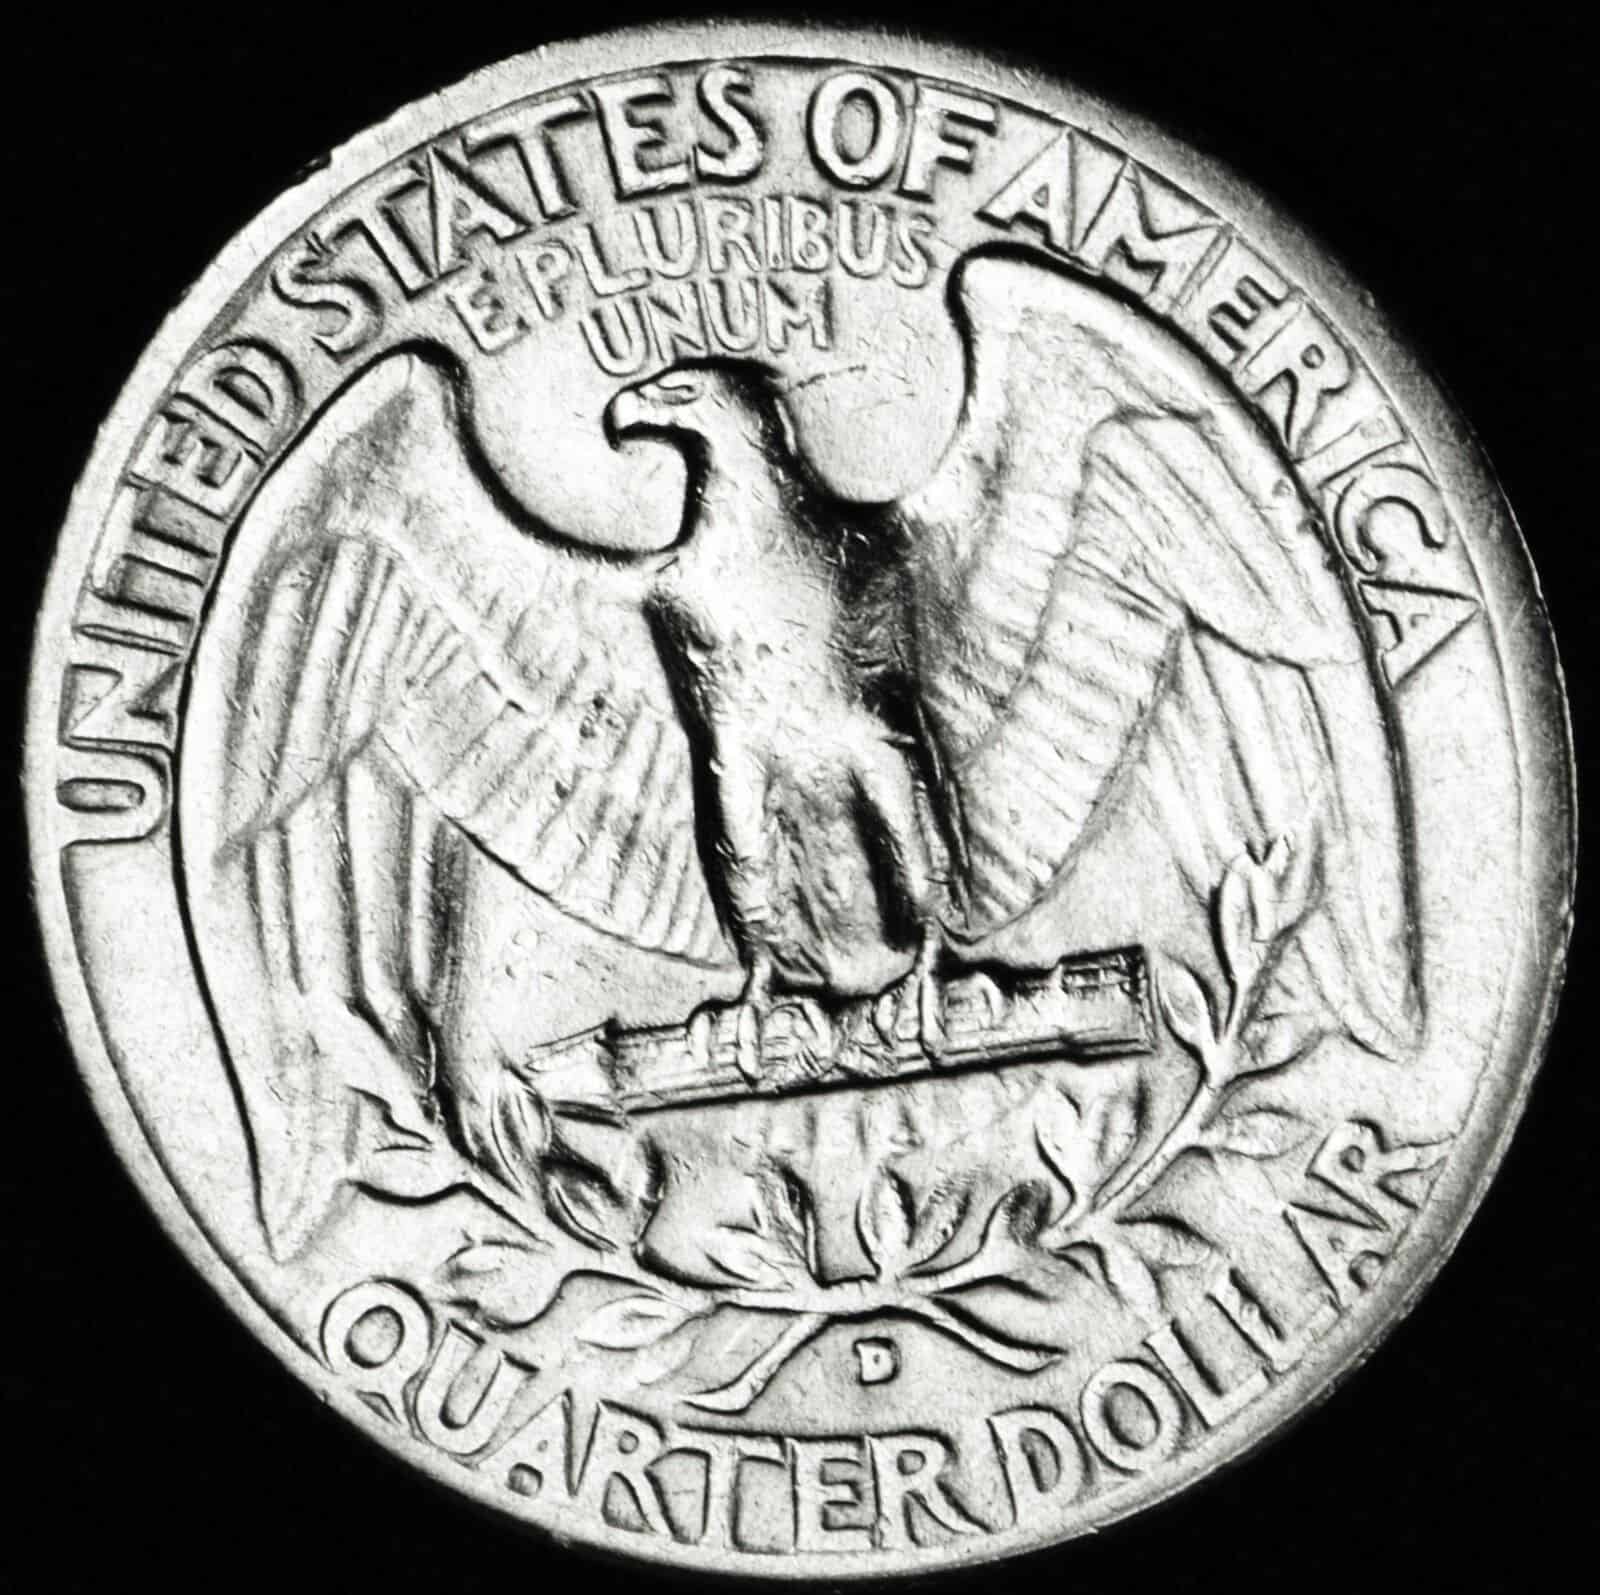 1934 ‘D’ Quarter